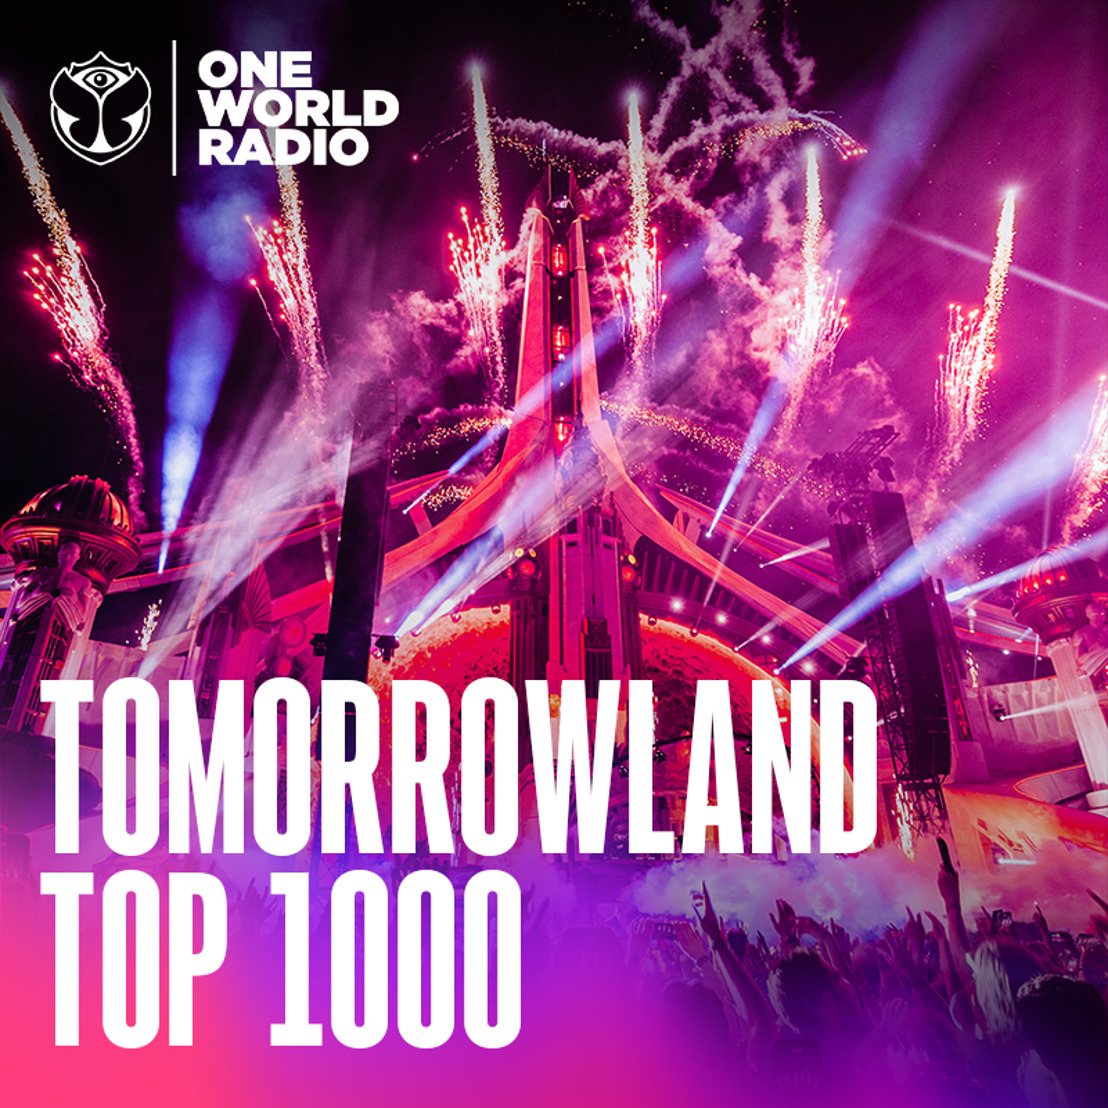 One World Radio kicks off the Tomorrowland Top 1000